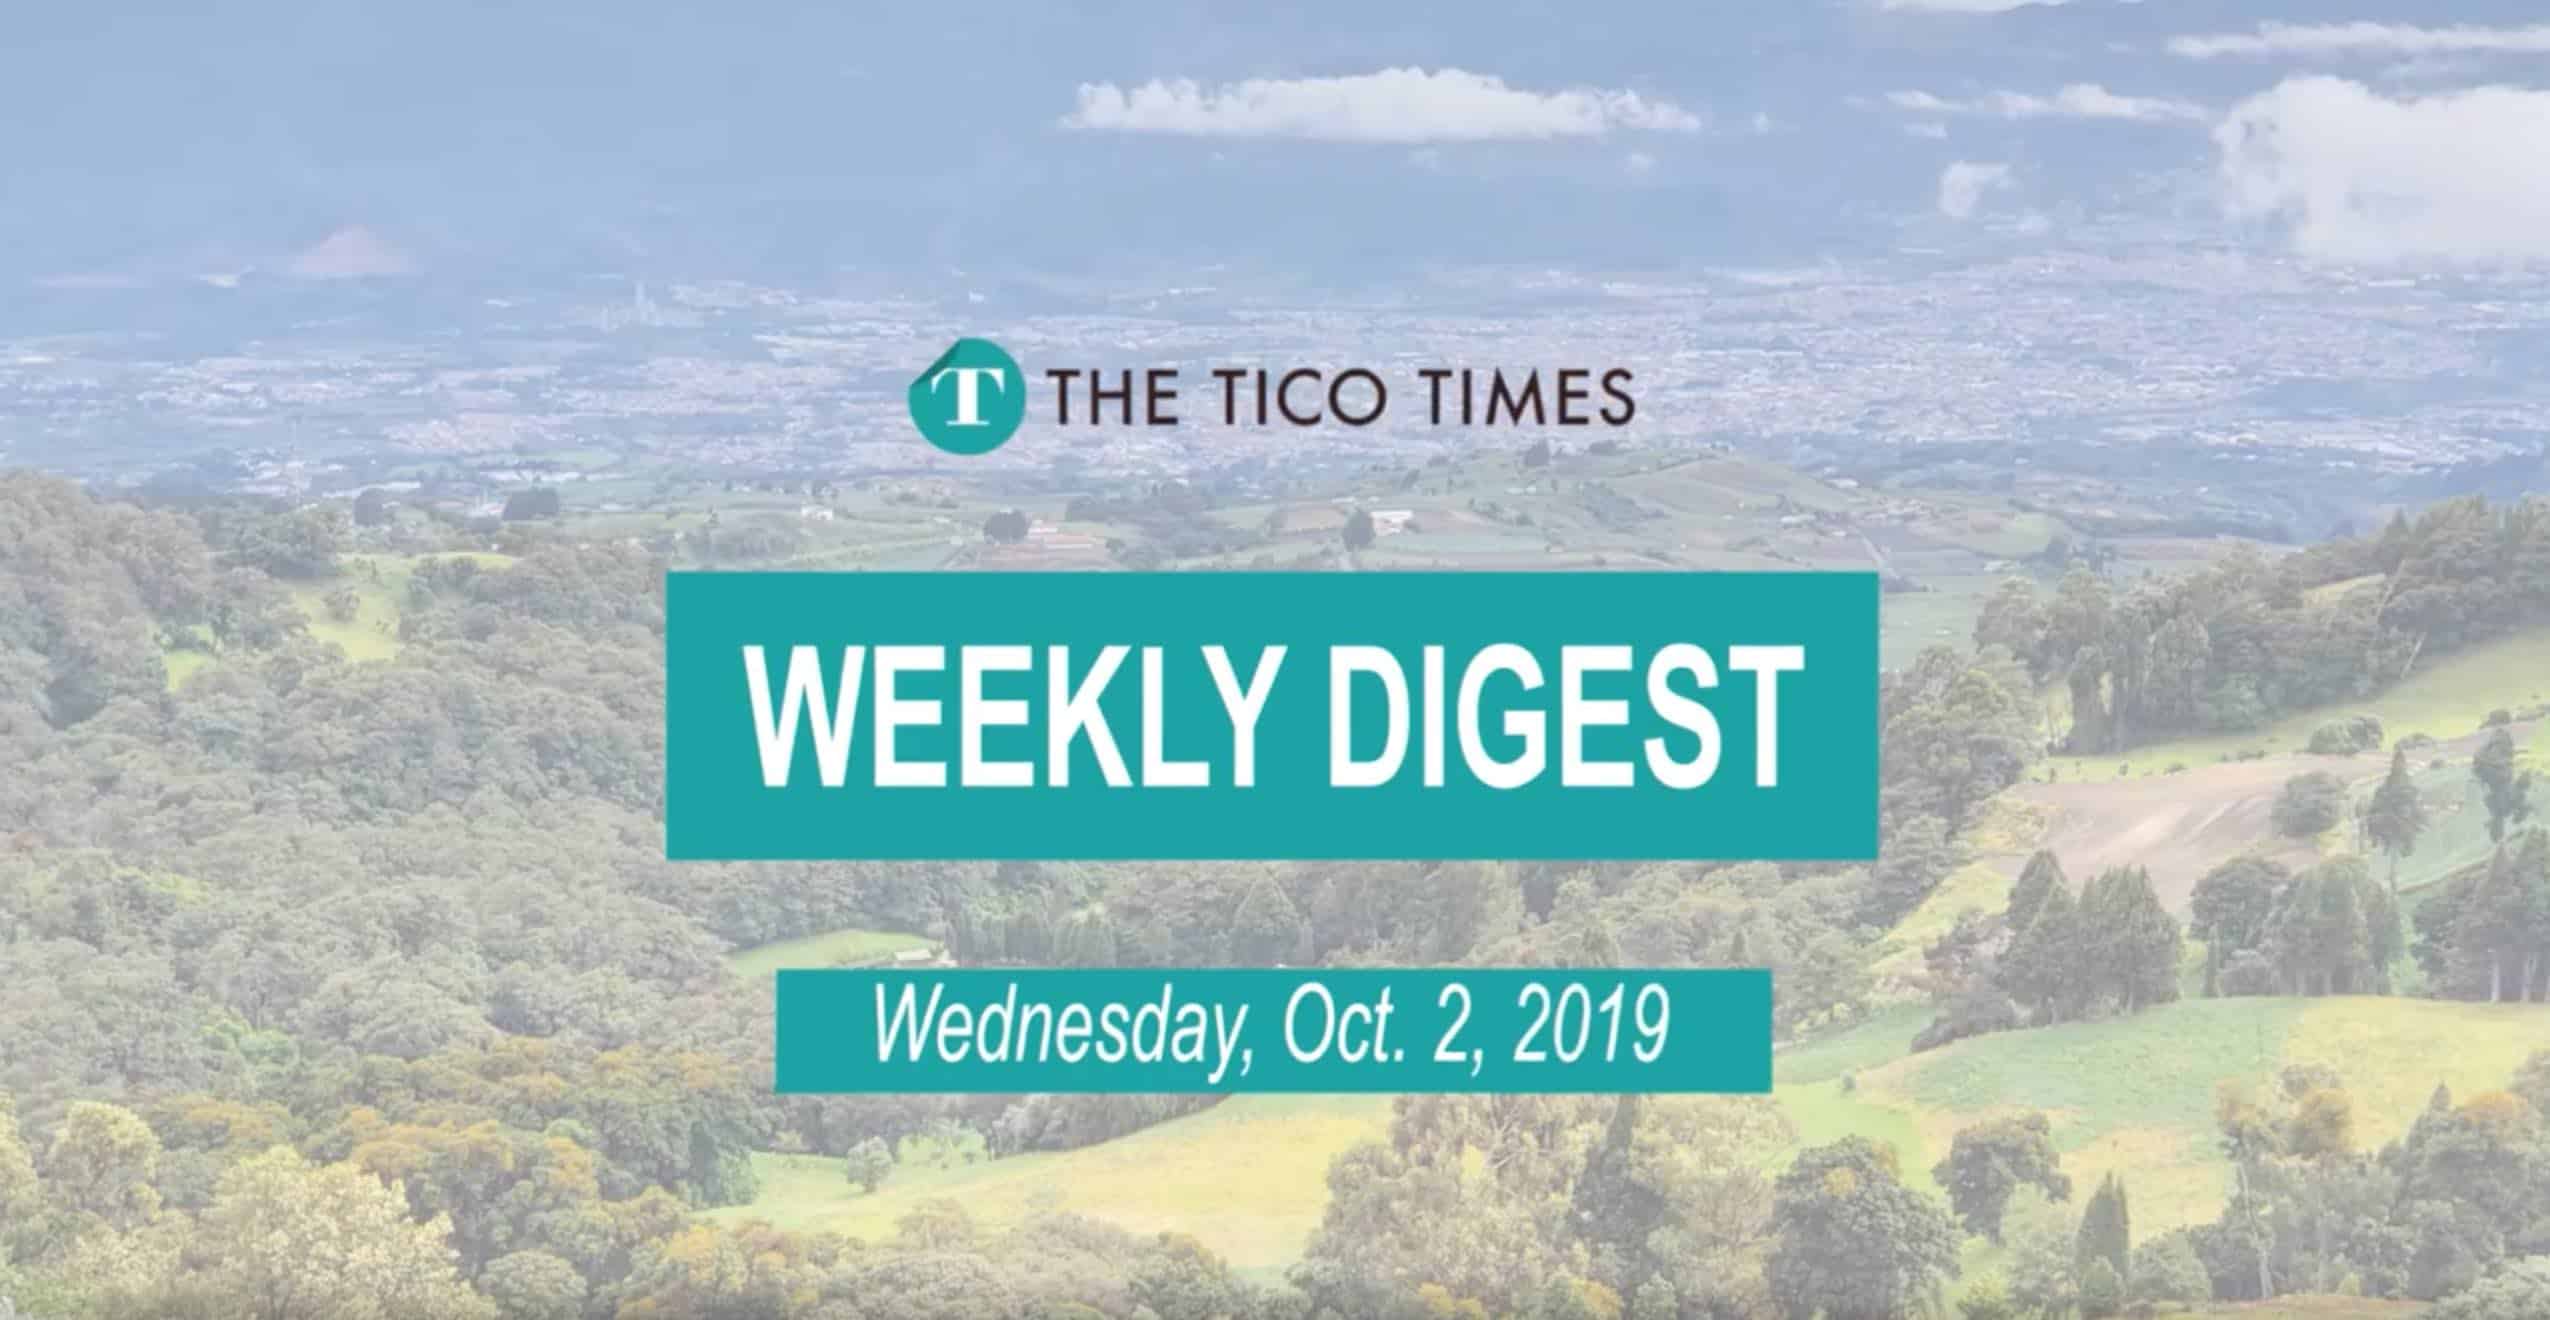 Tico Times Weekly Digest